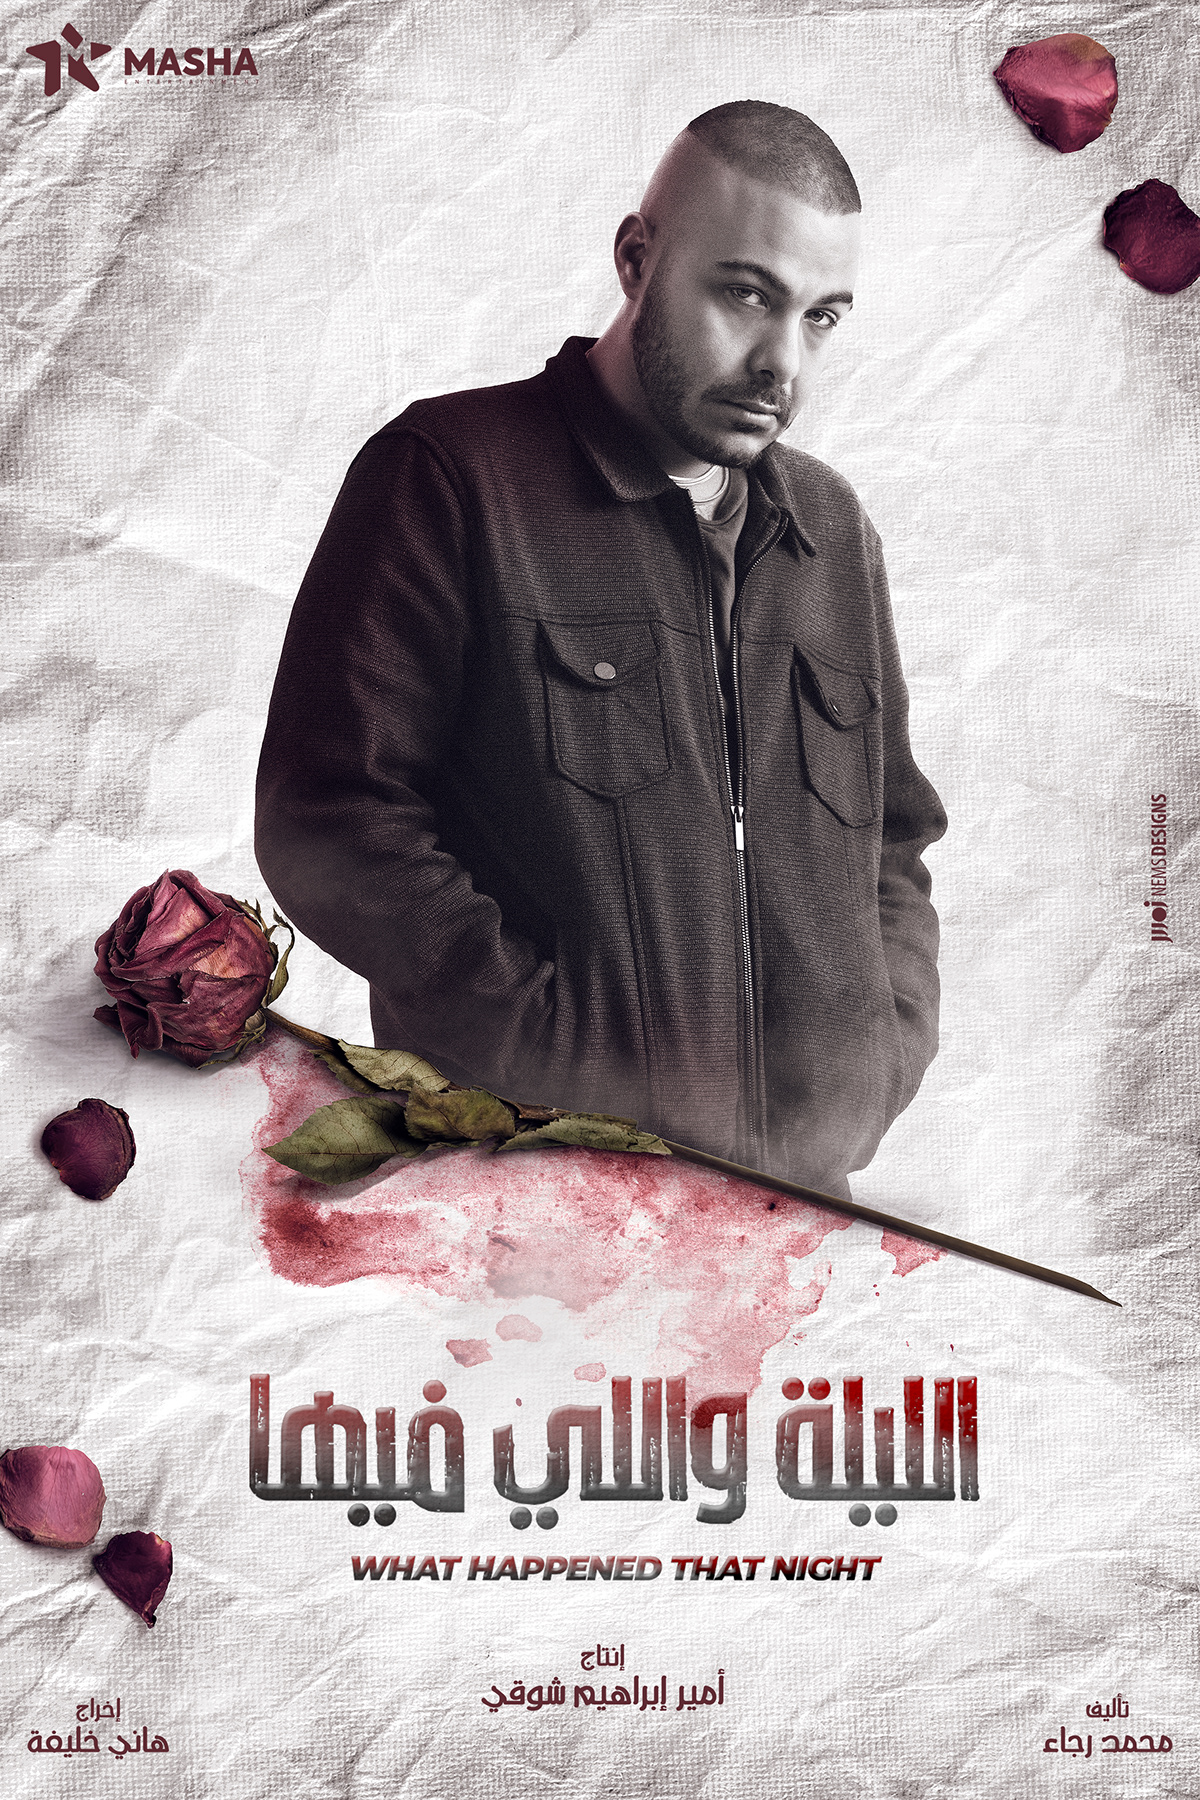 key visual Poster Design poster tv shahid KSA mbc Film   cinematography Editing 